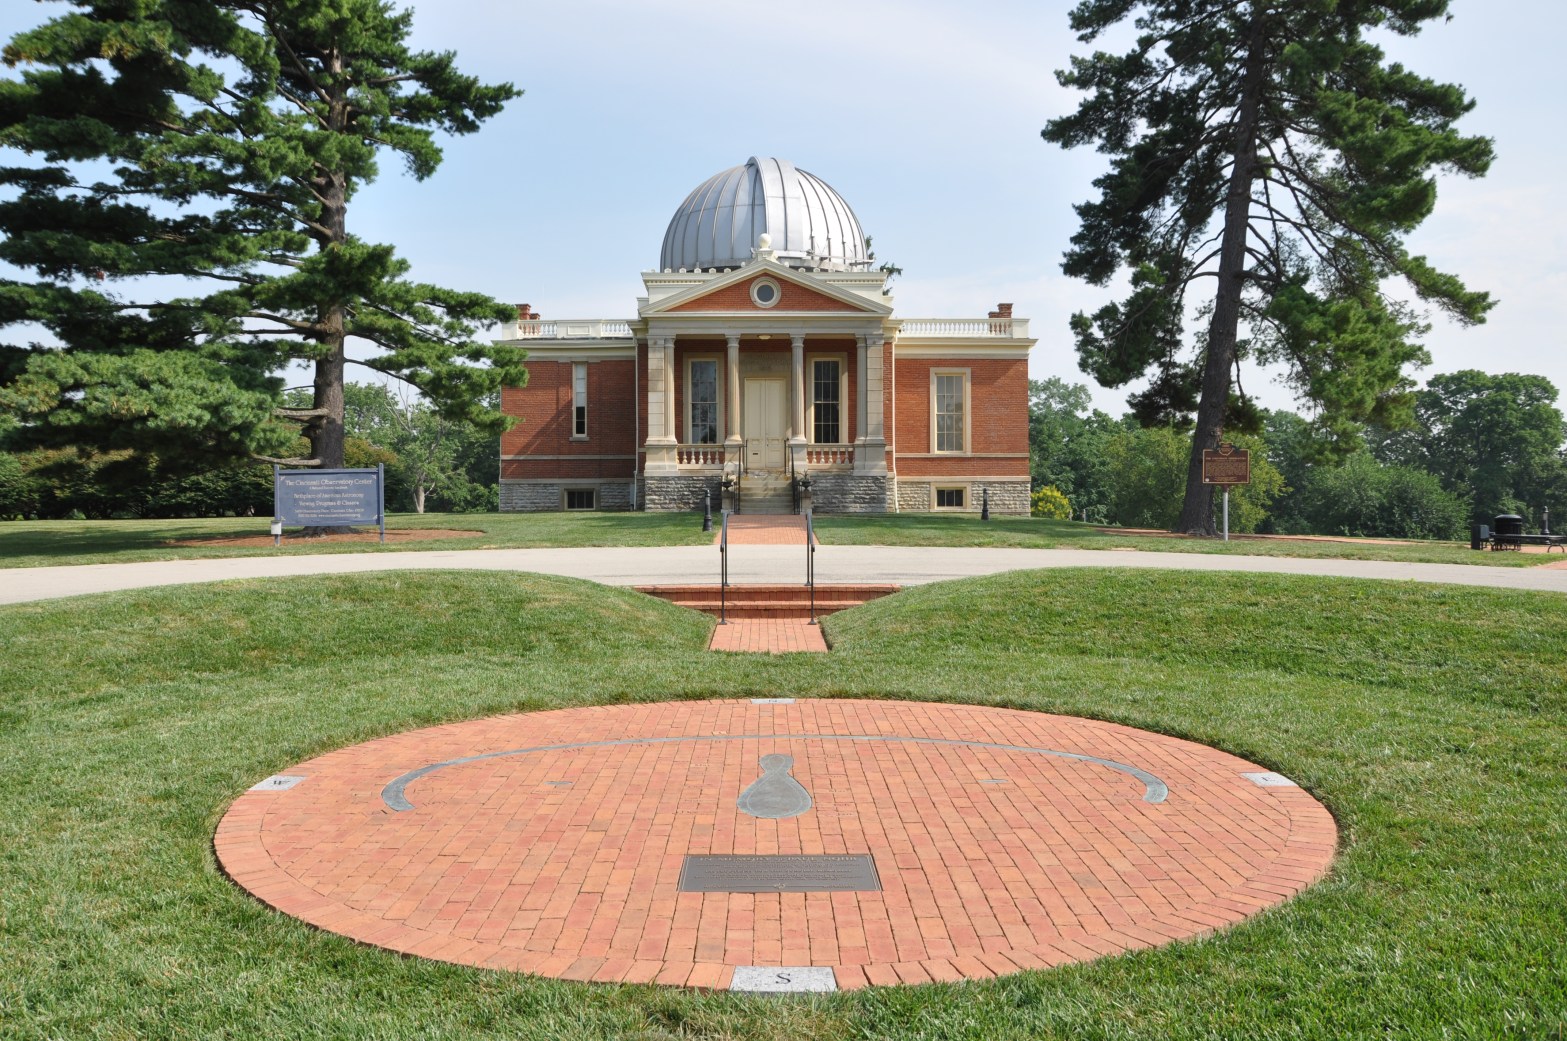 The Cincinnati Observatory's Sundial and Herget Bulding